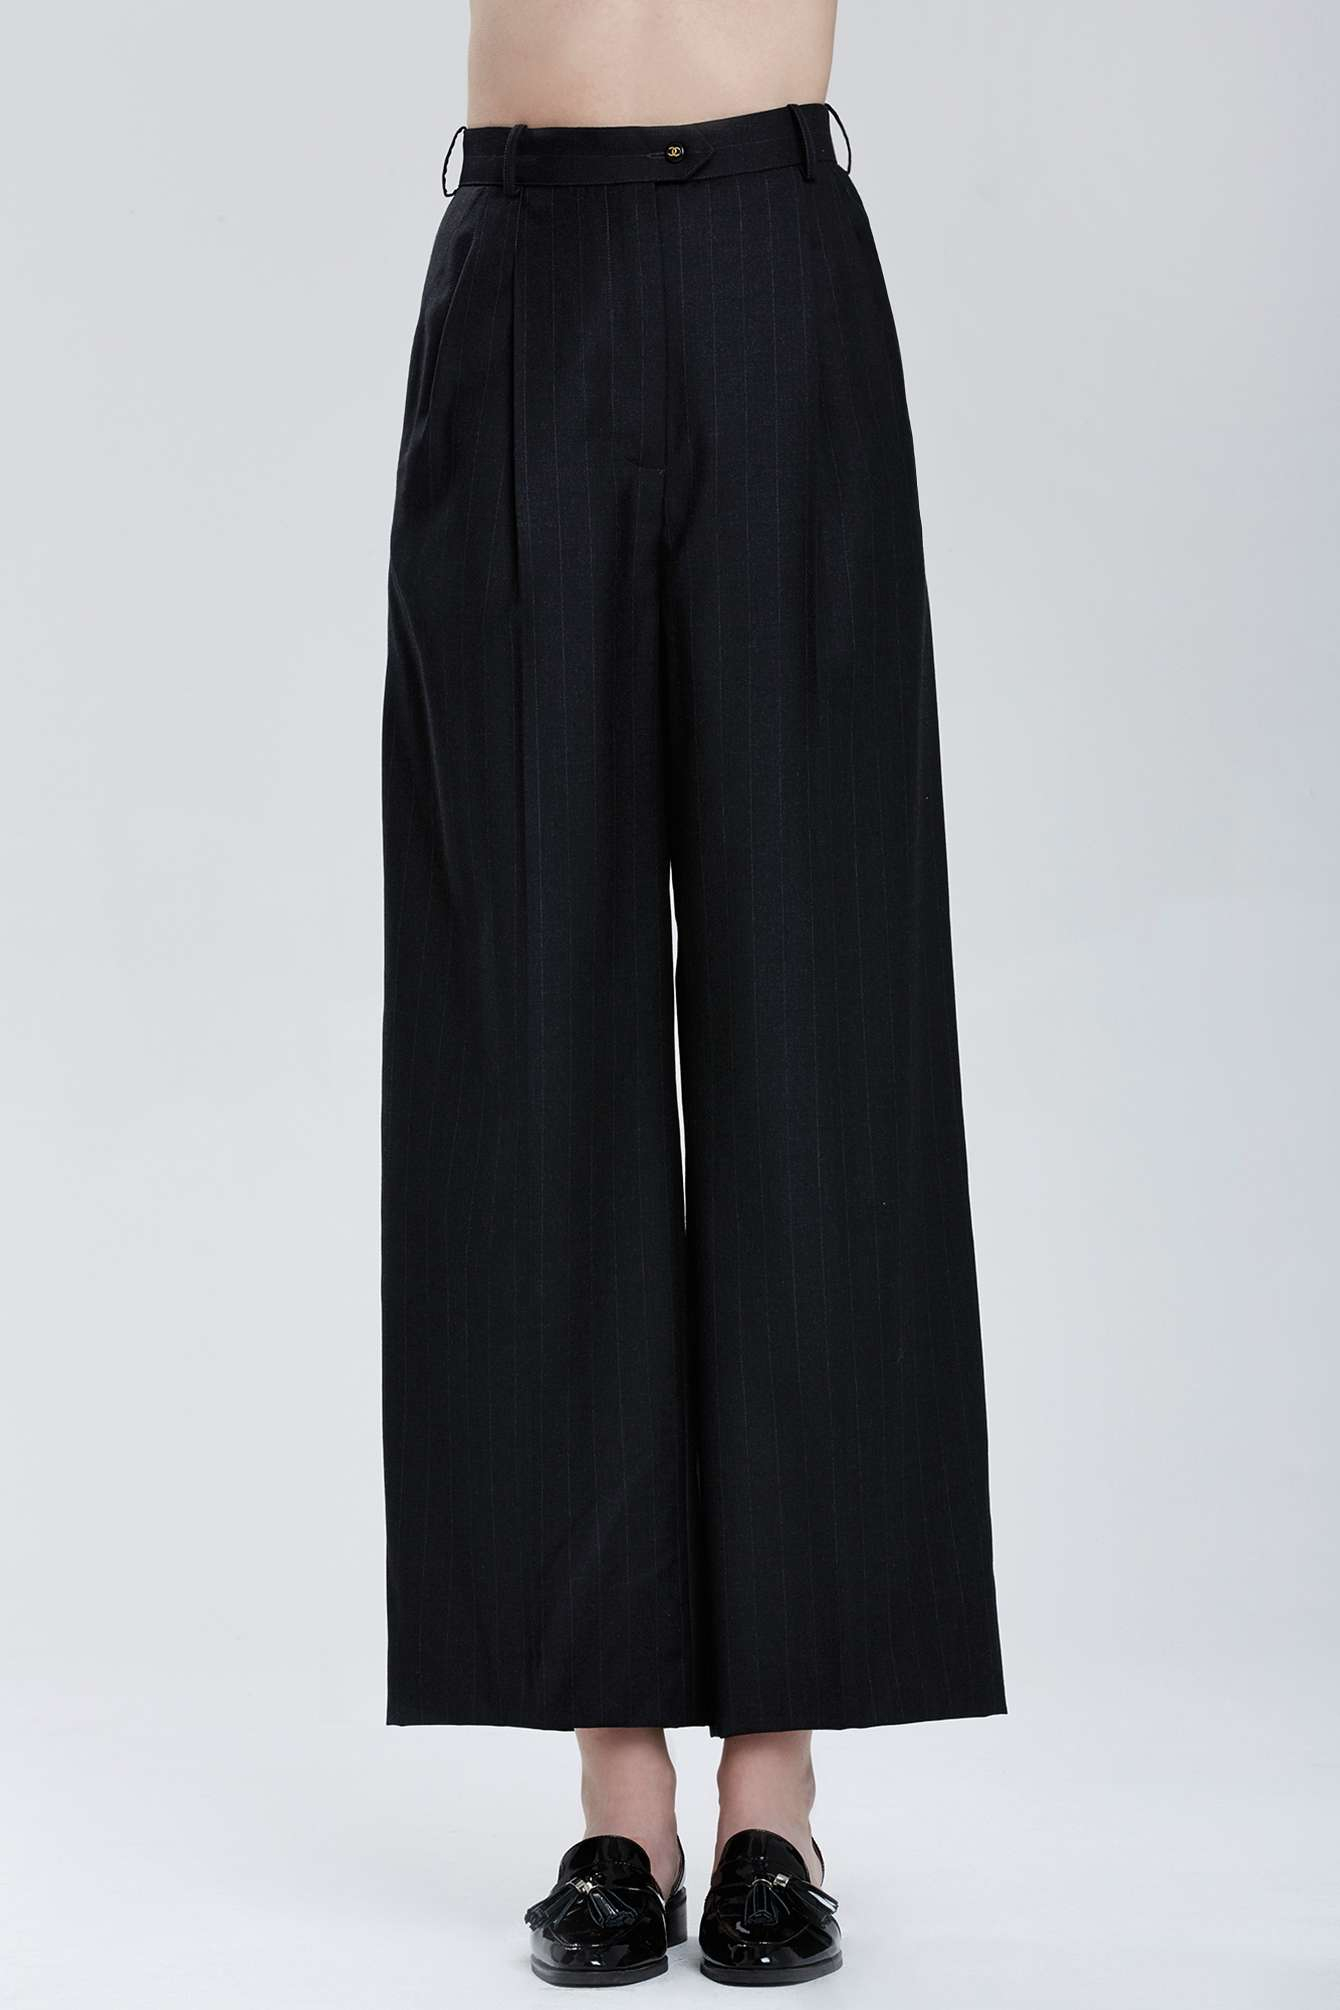 Chanel Vintage Bruay Pinstripe Trousers in Black | Lyst